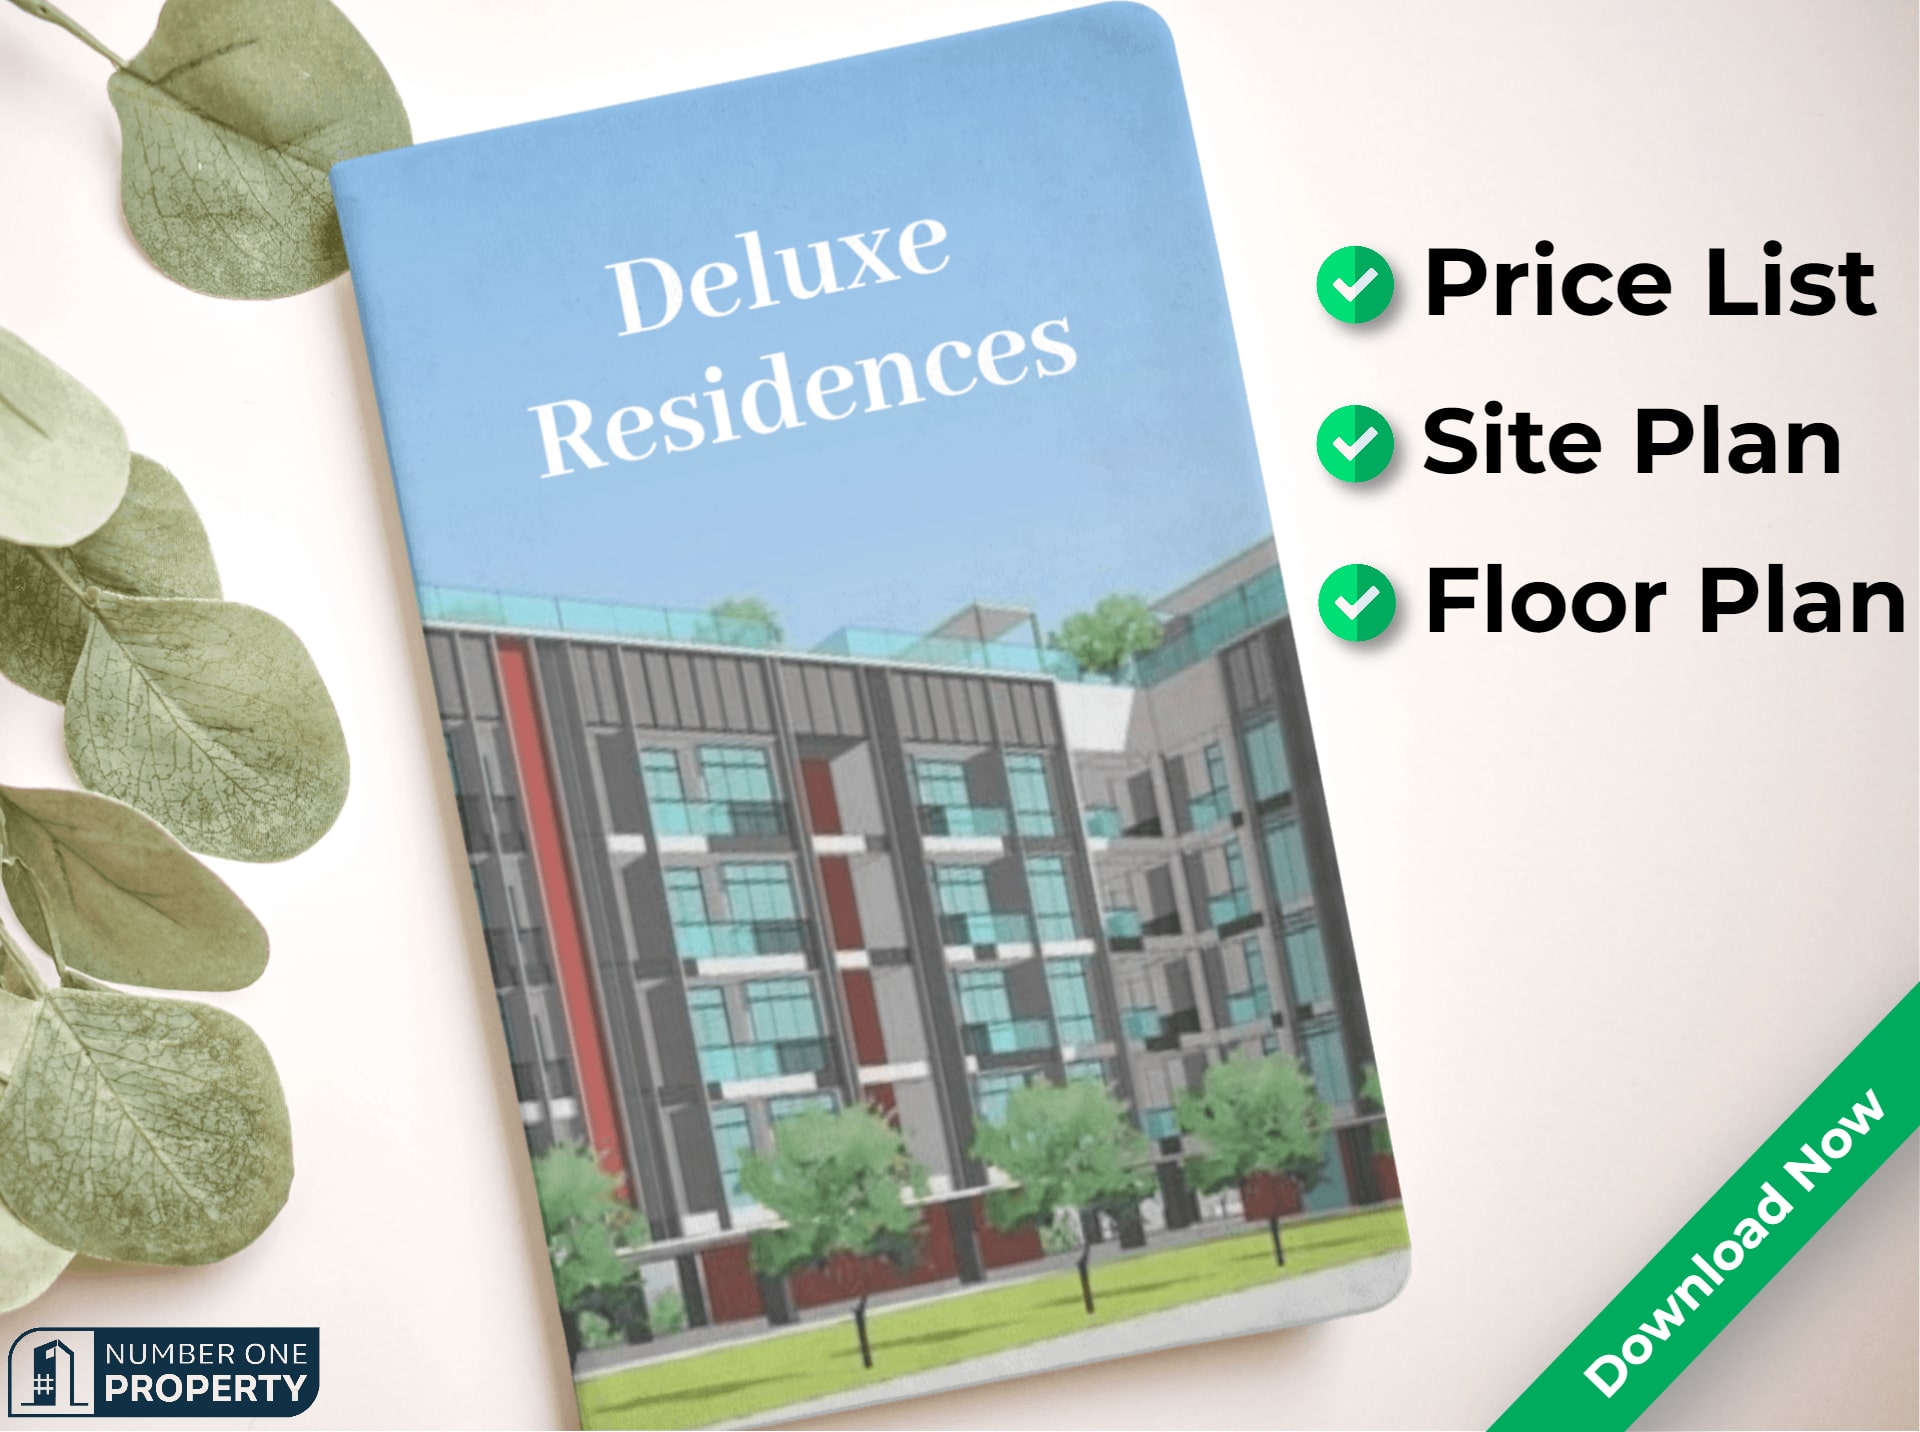 Deluxe Residences Brochure